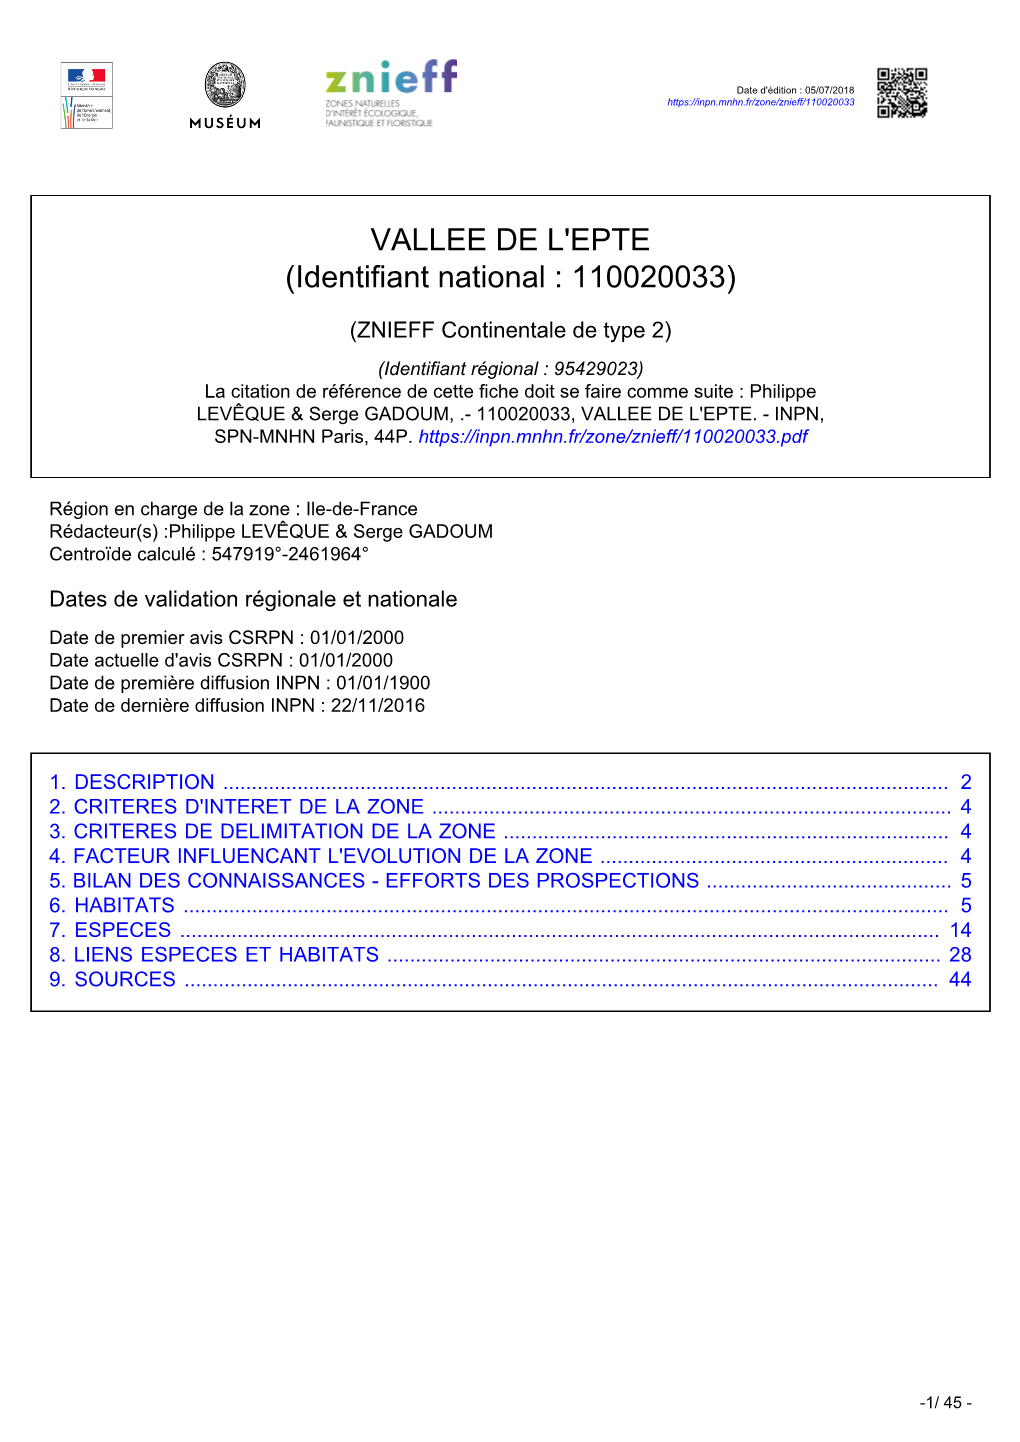 VALLEE DE L'epte (Identifiant National : 110020033)